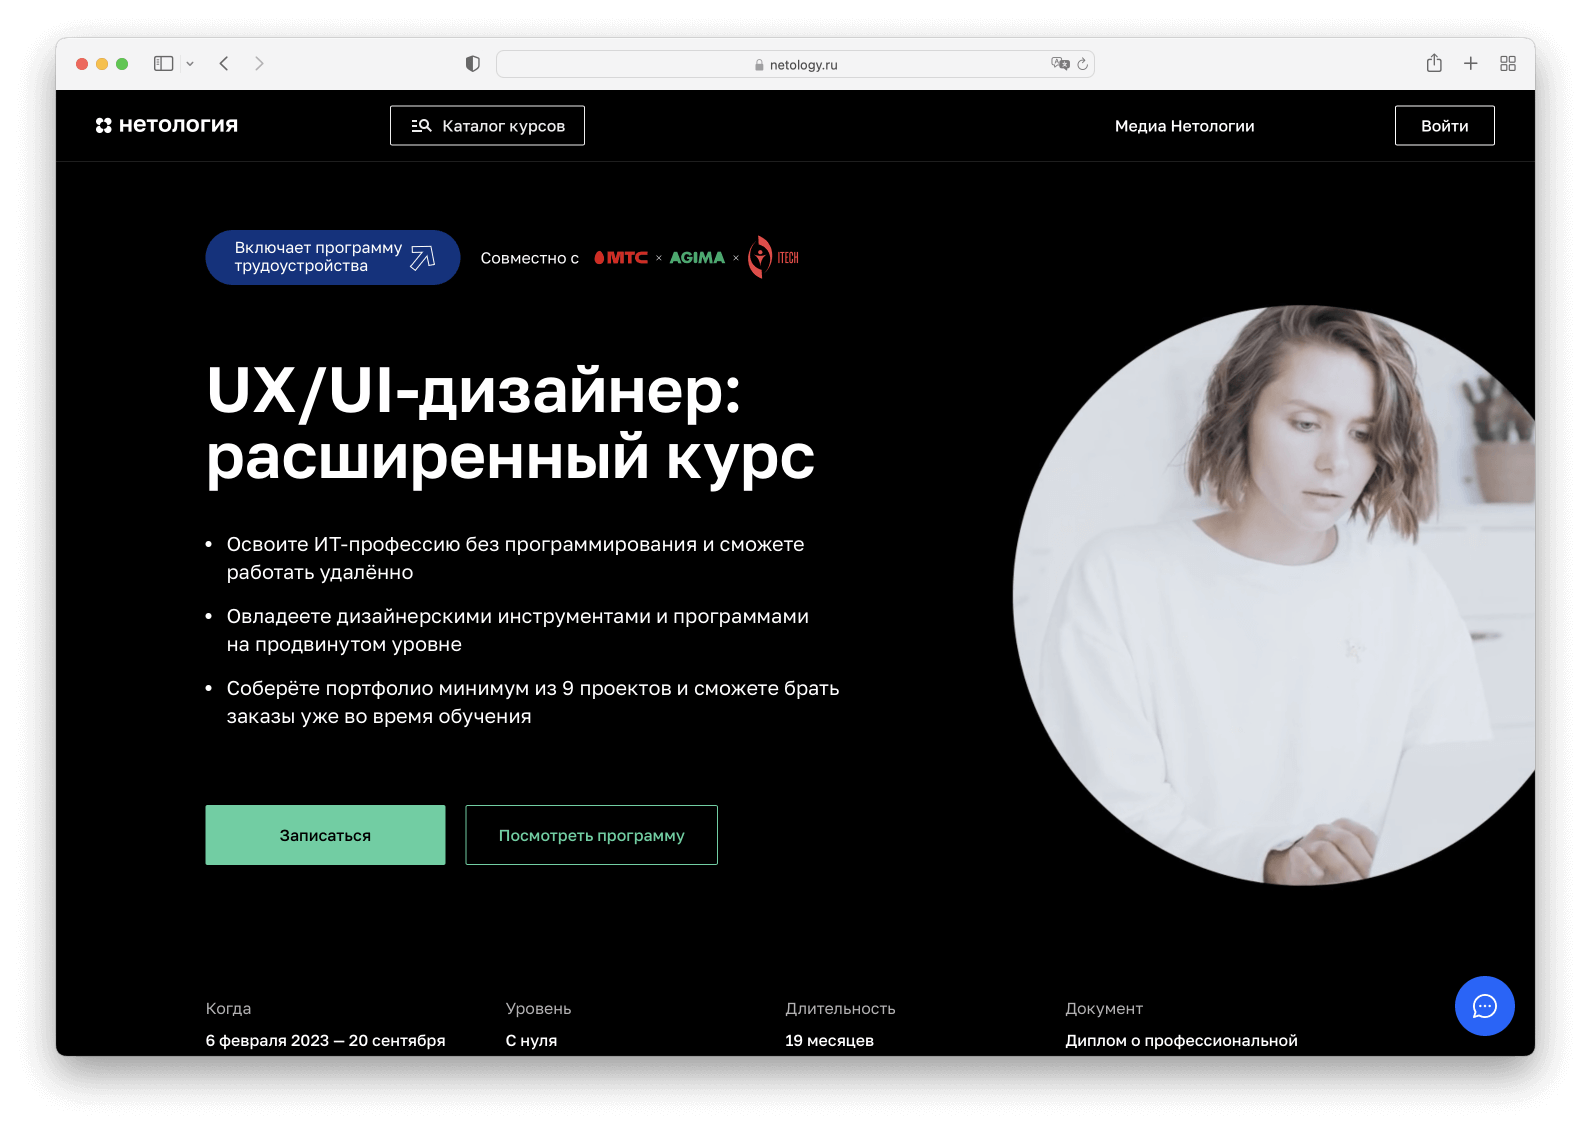 UX/UI-дизайнер: обучение на онлайн-курсе с нуля в Нетологии